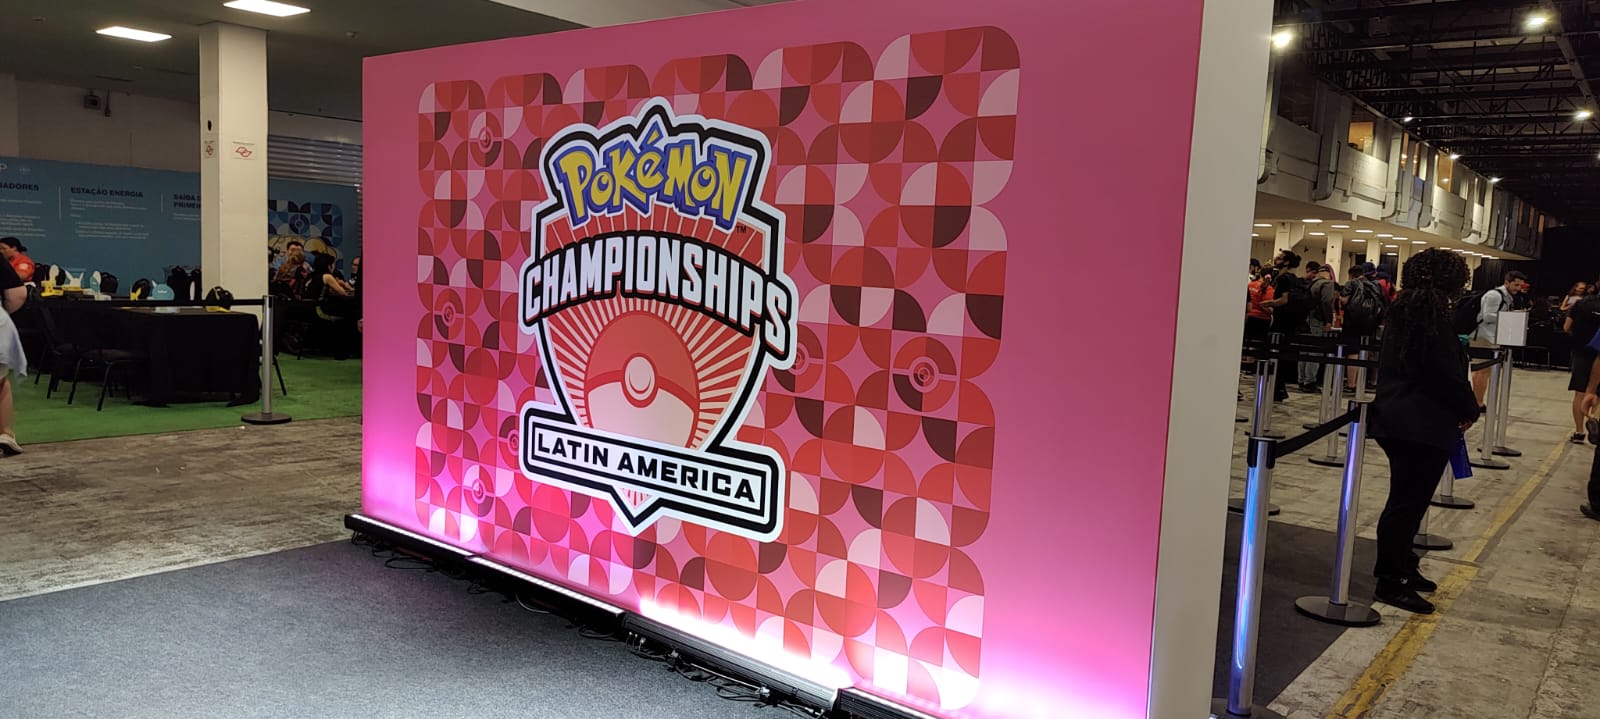 Pokémon Championships Latin America